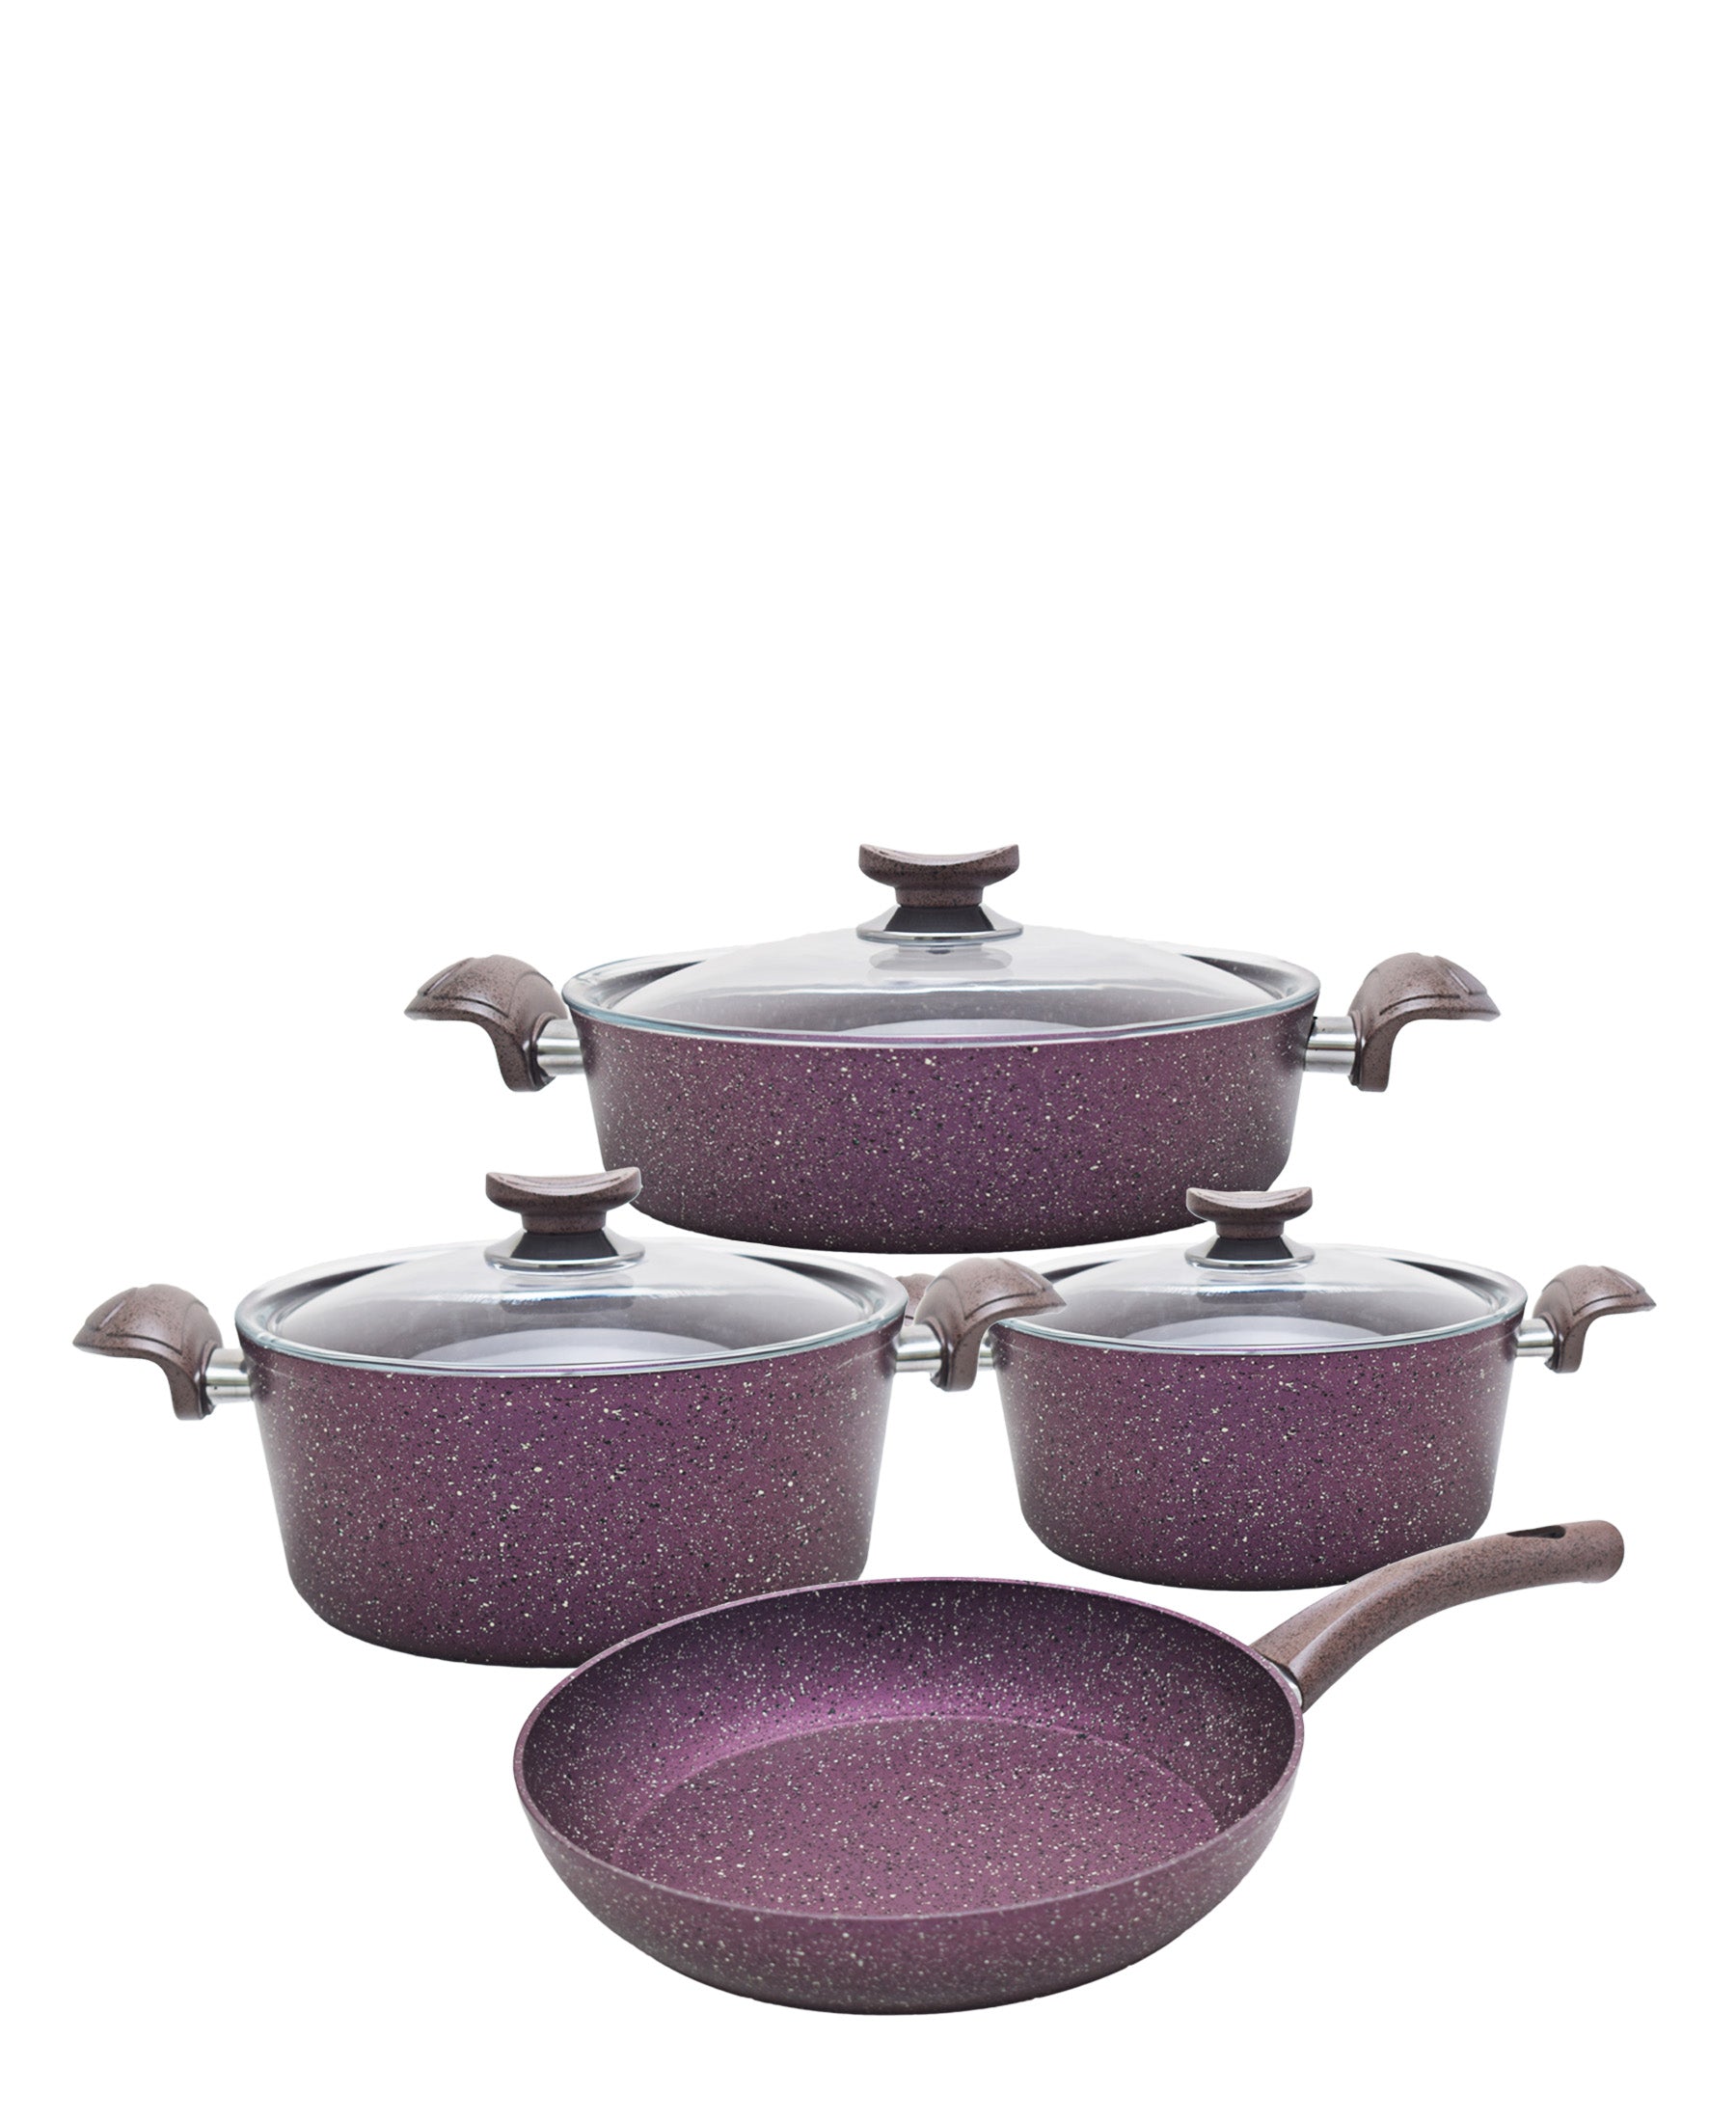 Assos Elita 7 Piece Purple Granite Cookware Frying Pan Takımı home set  Kitchen Yemek Restorant Trend Cheap 2021 Pots Granite Suit purple -  AliExpress